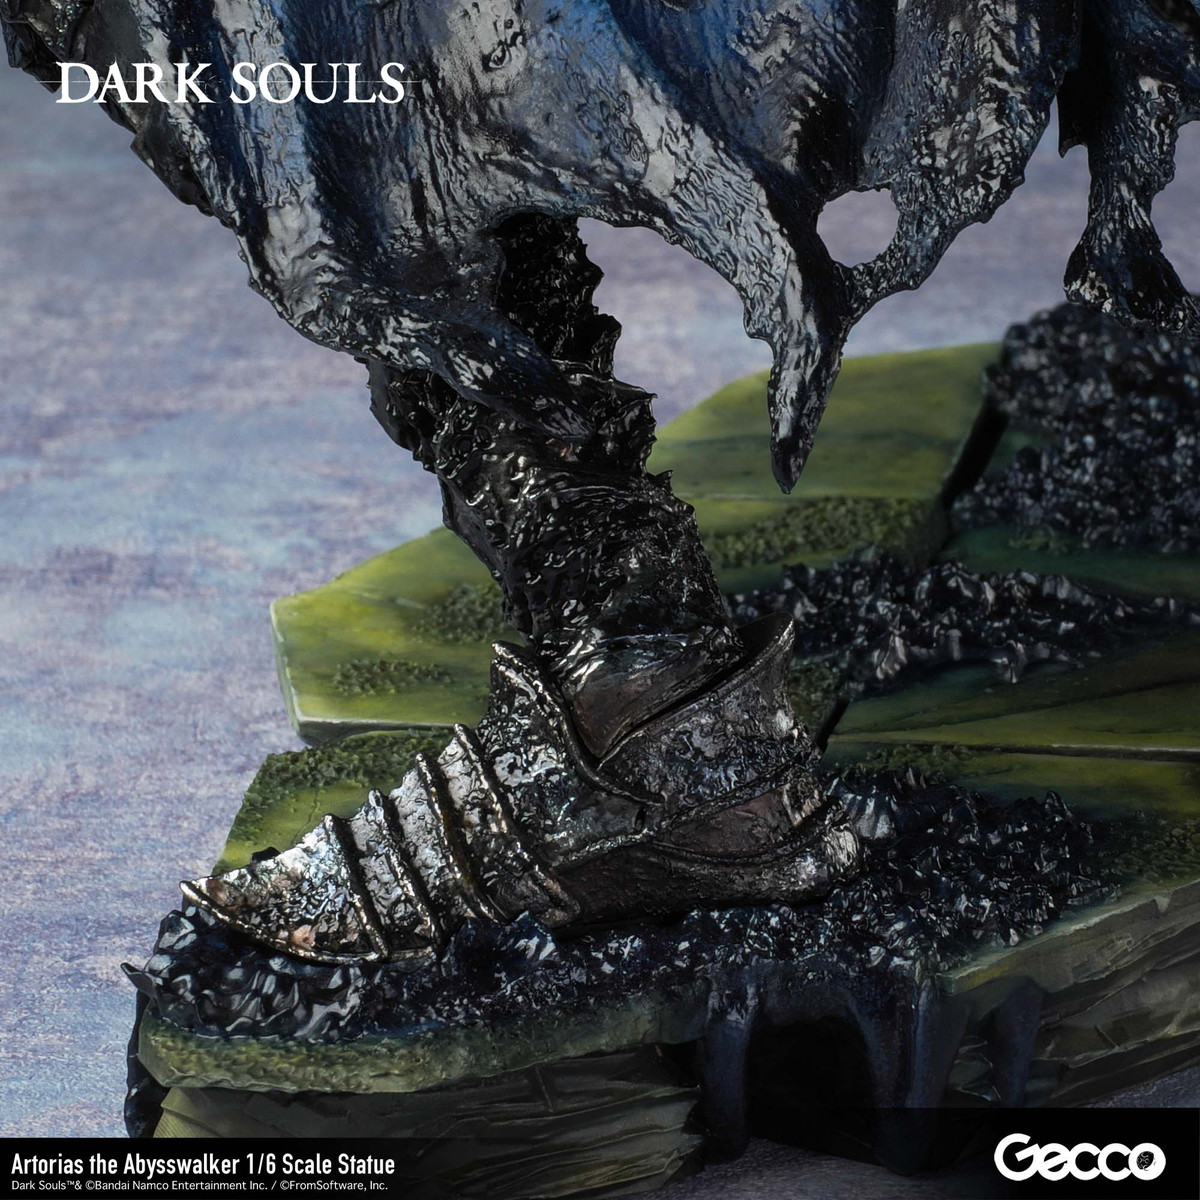 DARK SOULS「深淵歩きアルトリウス」のフィギュア画像